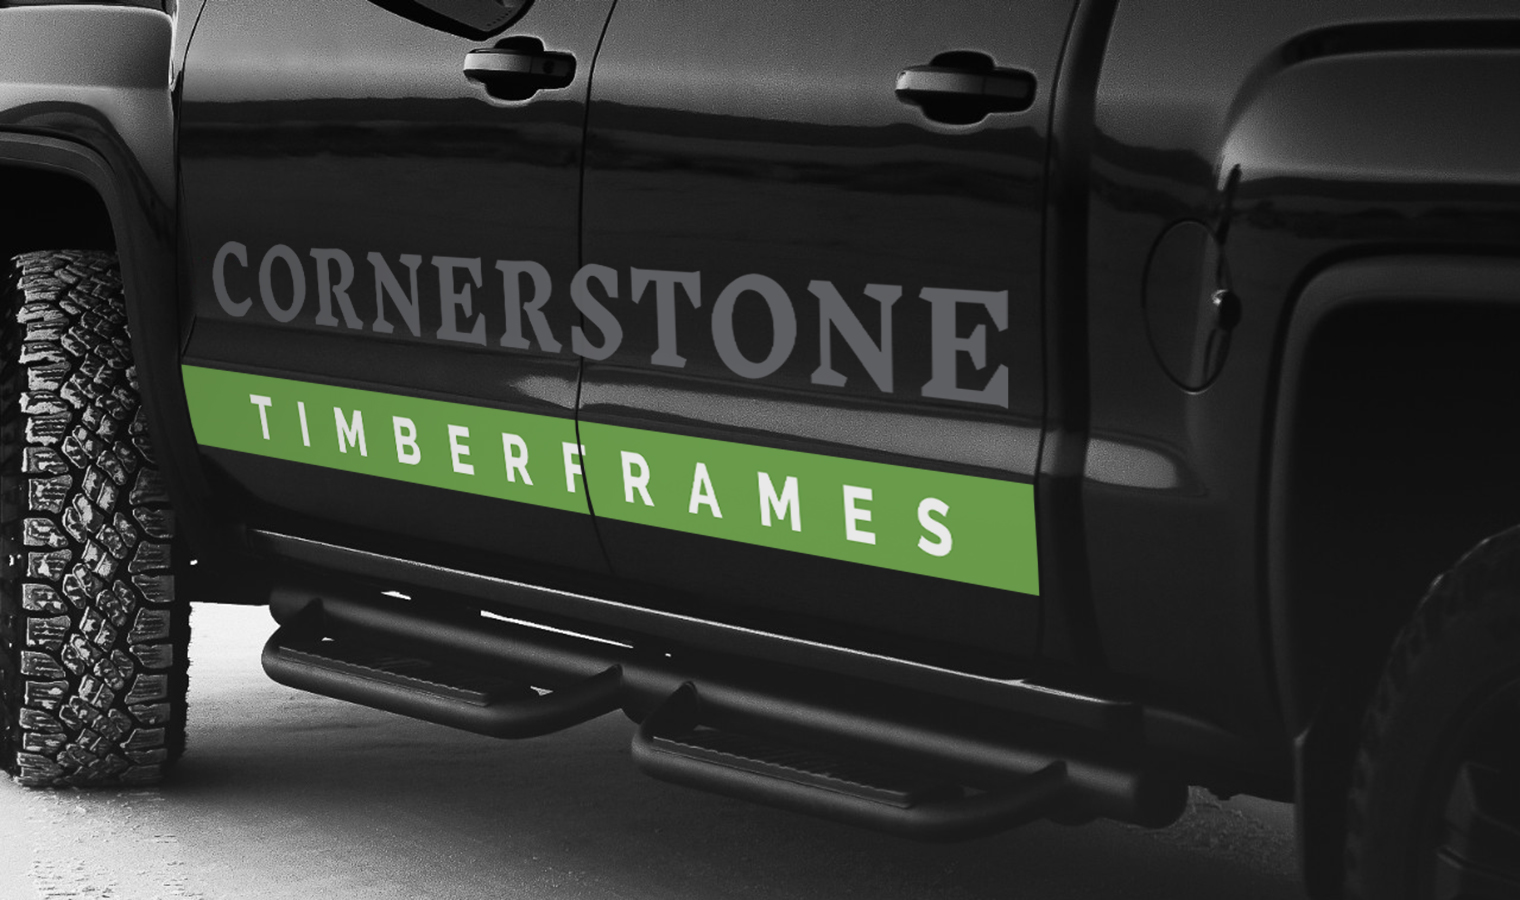 Cornertsone Timberframes Trucks Decal